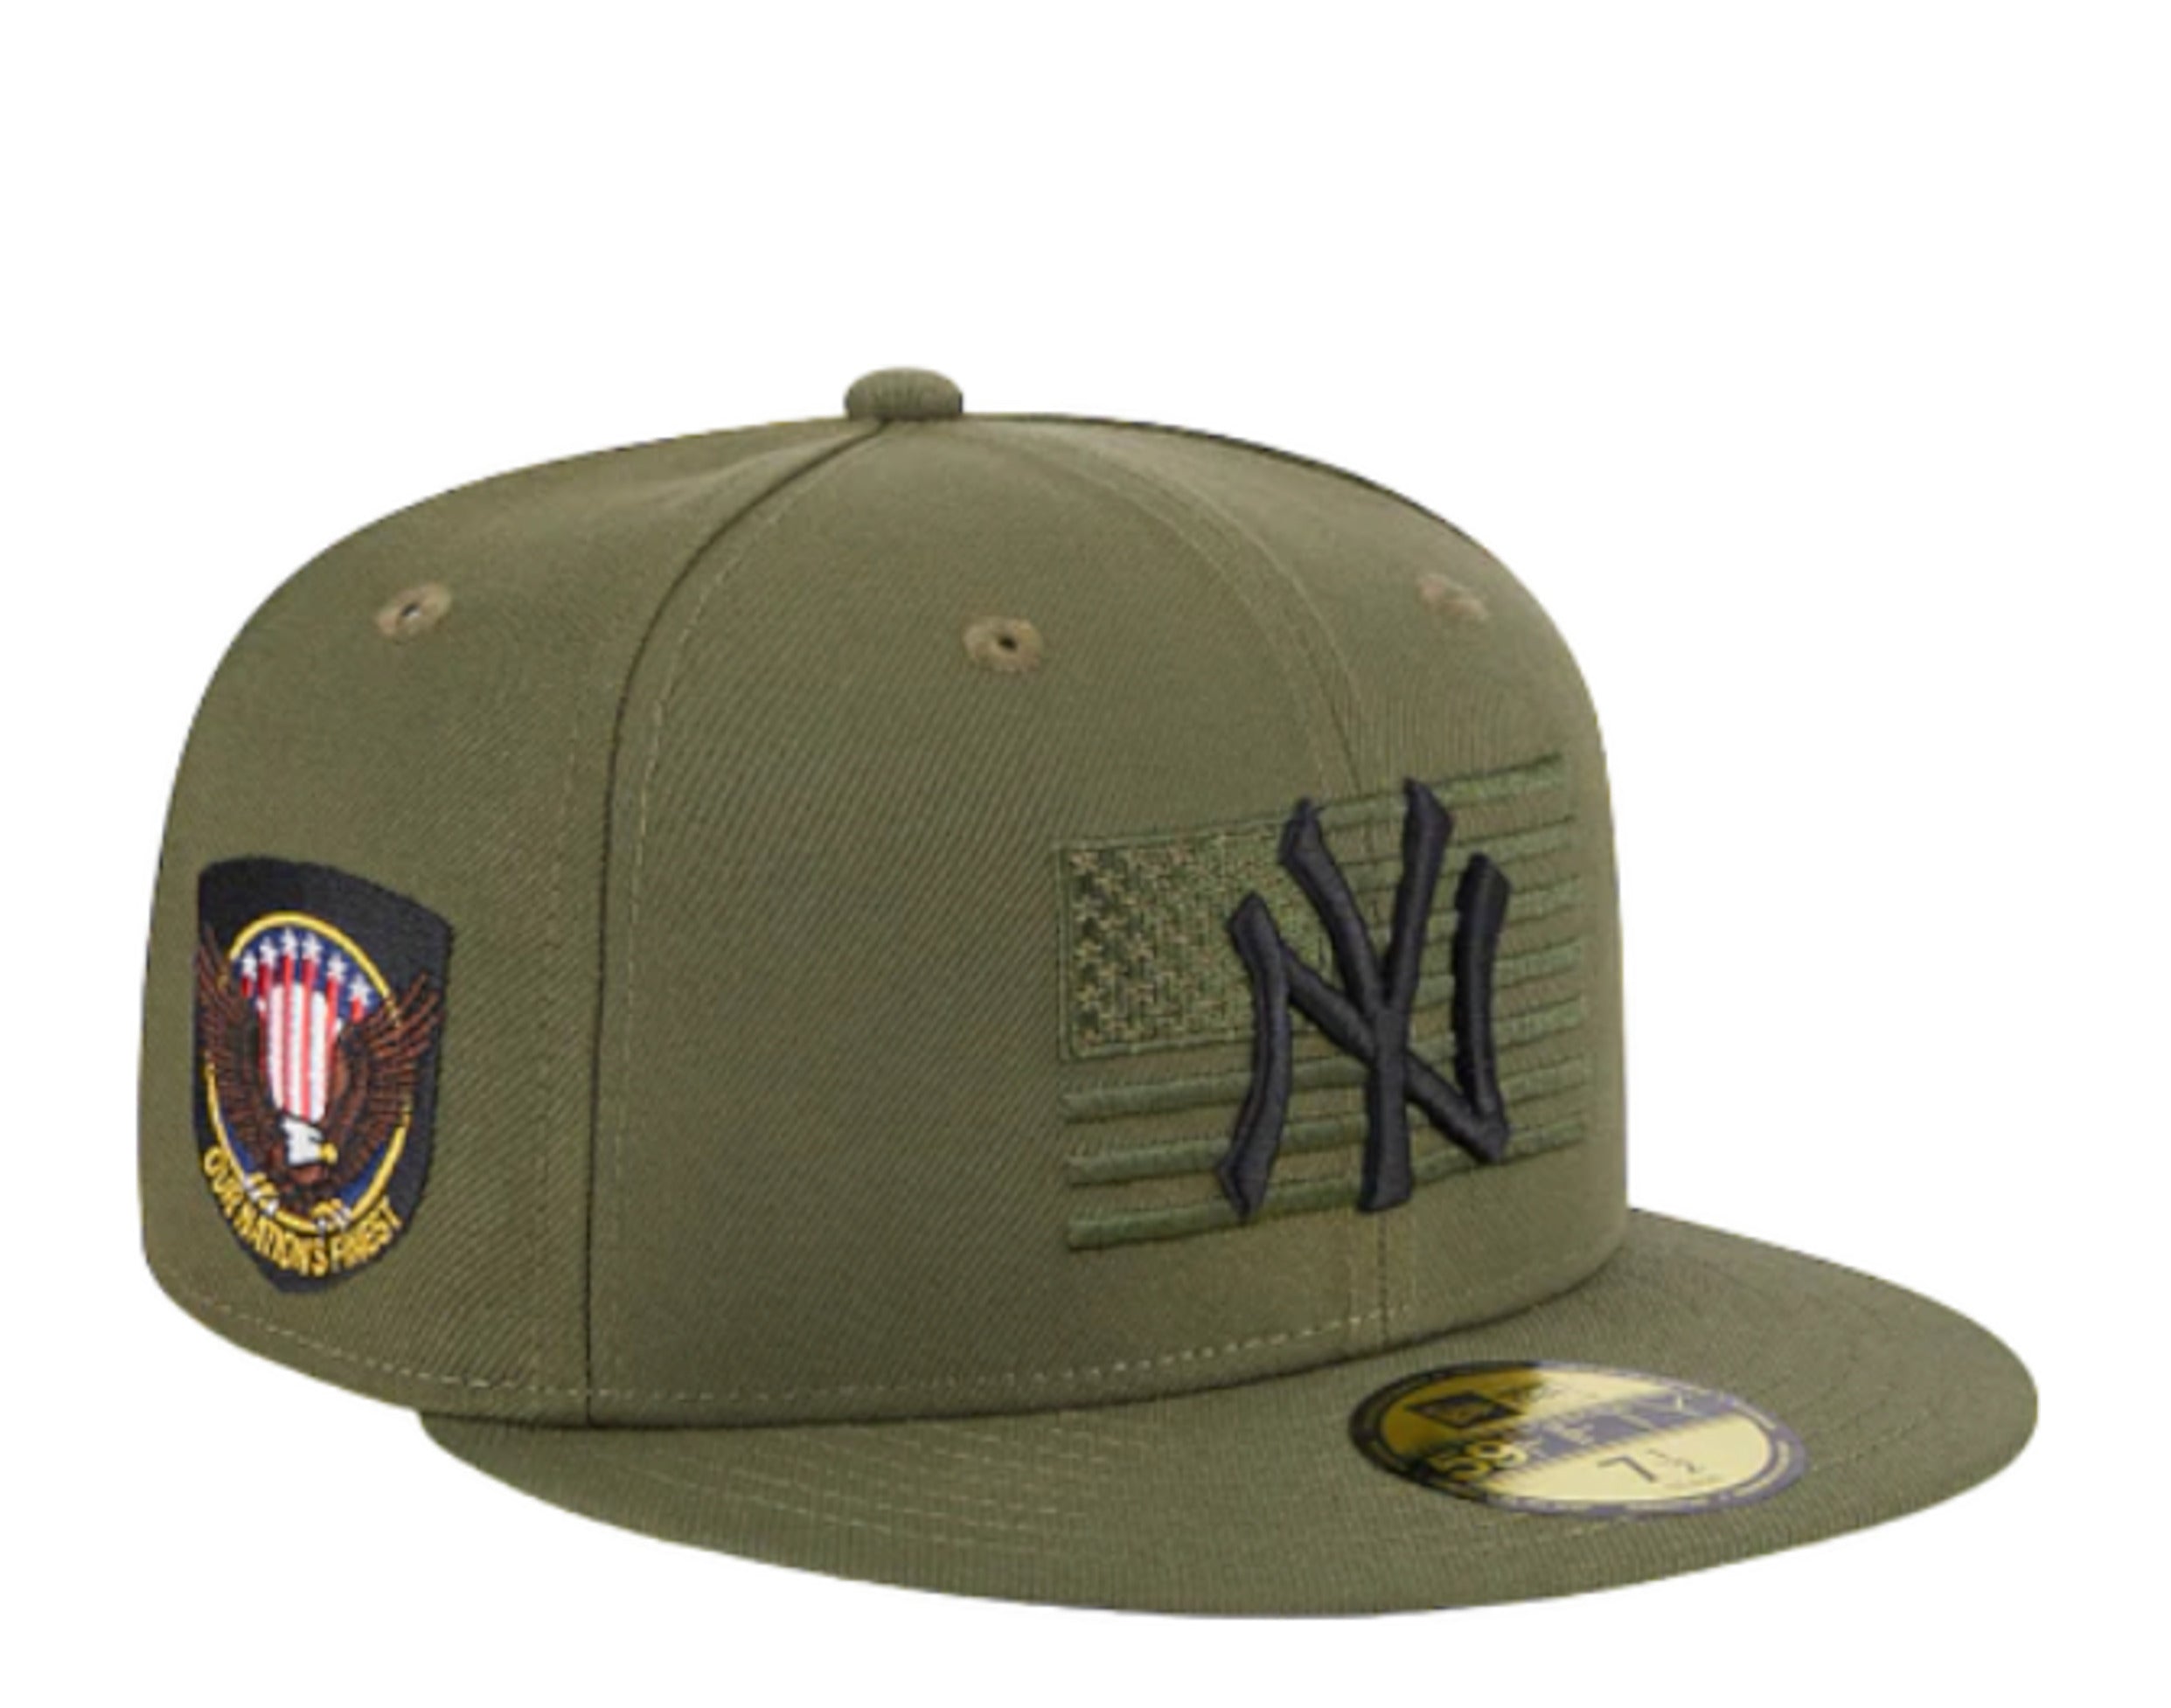 New Era - NY Yankees MLB Flag Graphic T-Shirt - Grey